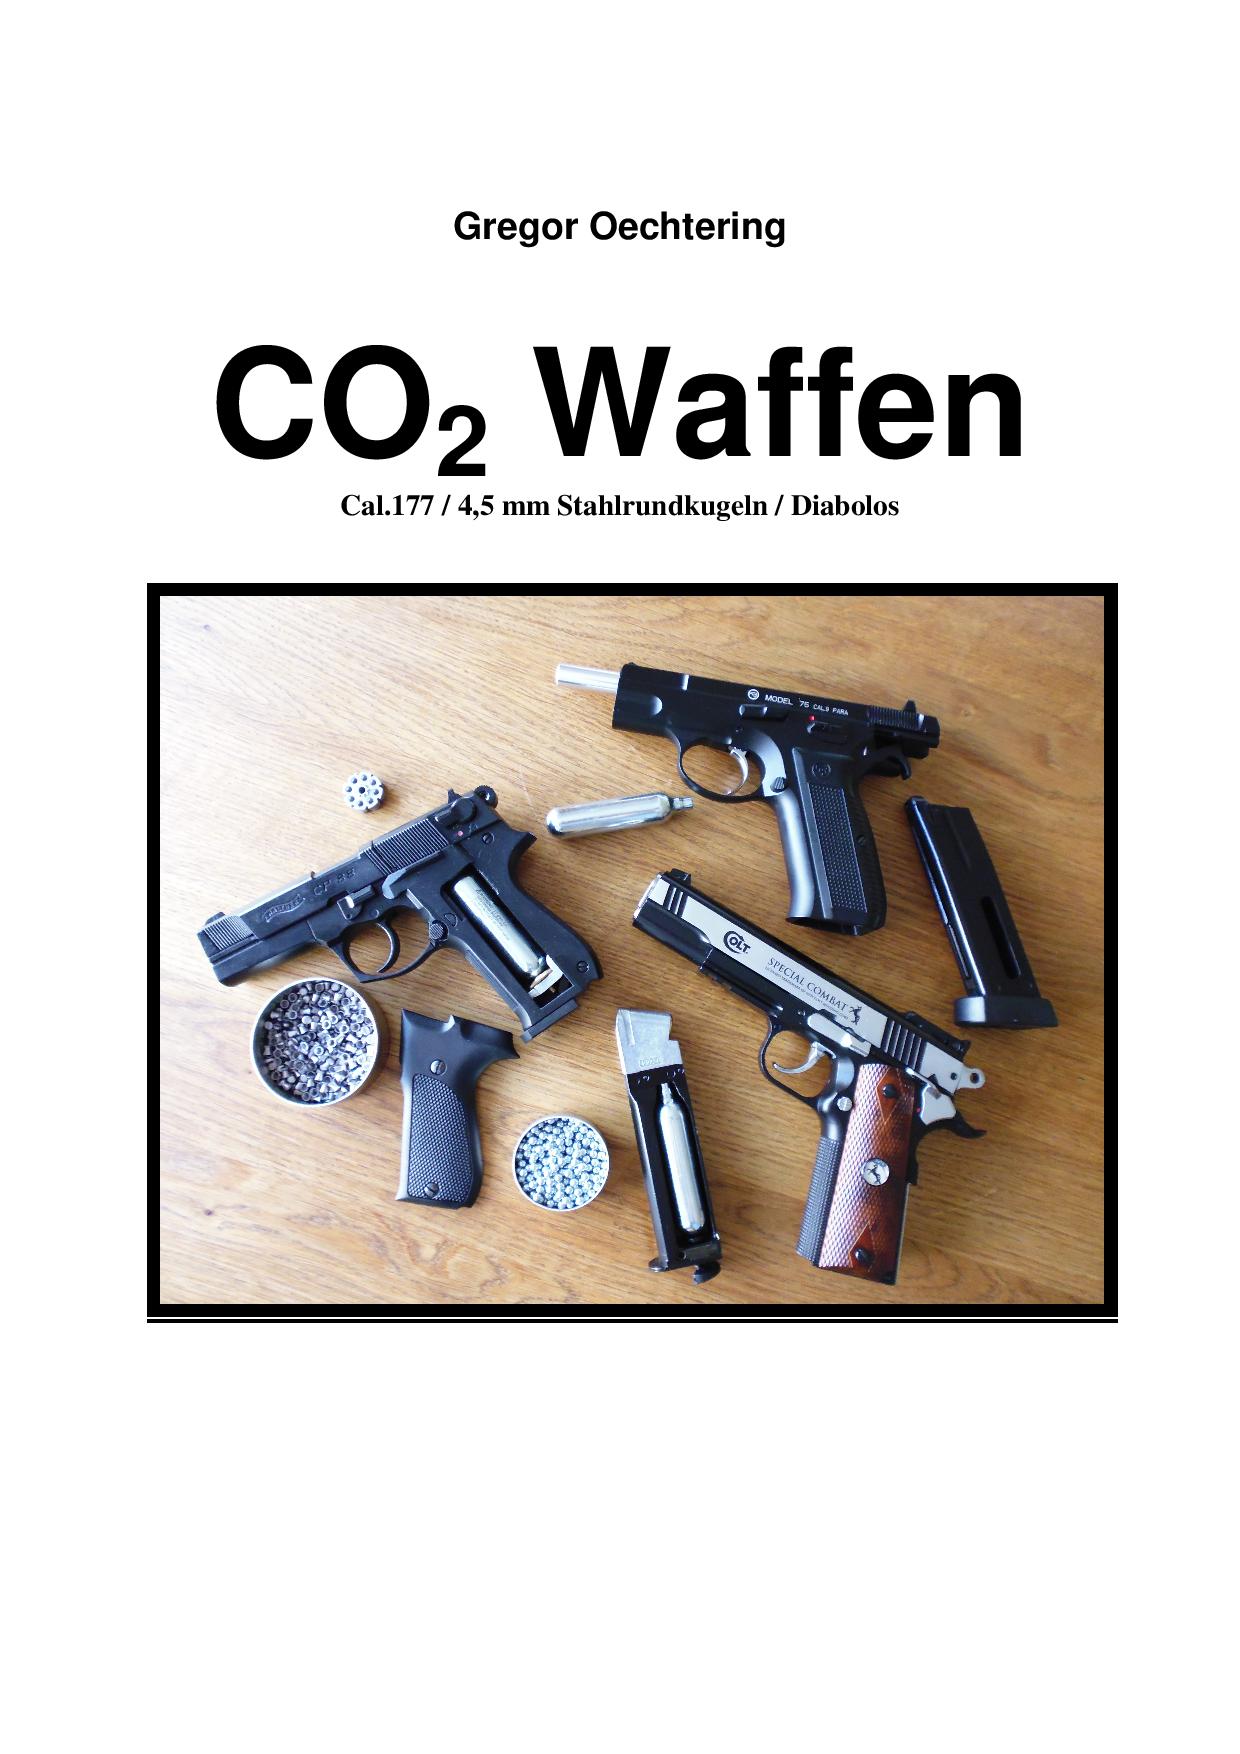 Gregor Oechtering CO2 Waffen Front-page-001.jpg